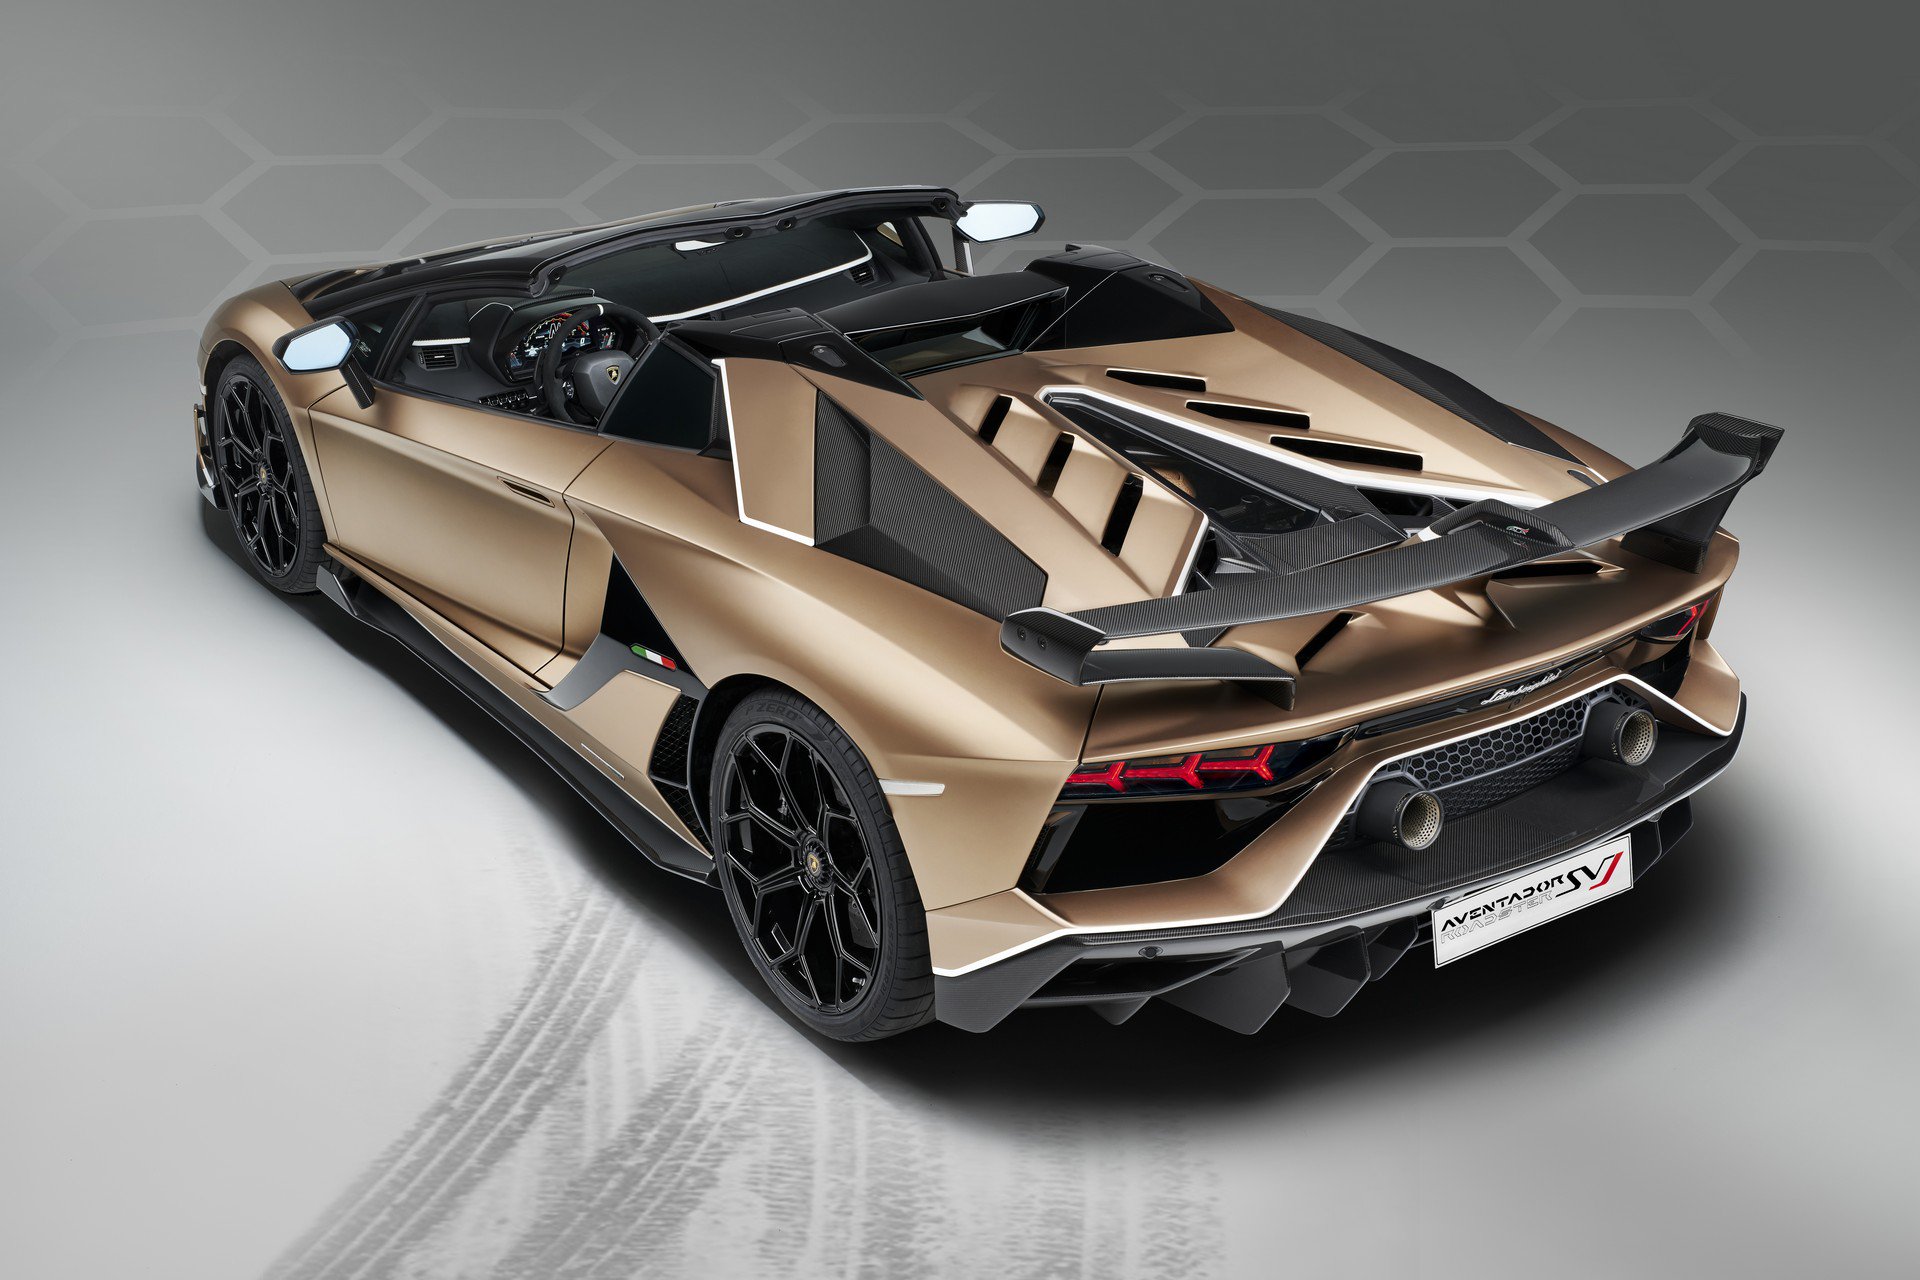 Vb Exhaust For Lamborghini Aventador Svj Limited To 78 Units Worldwide